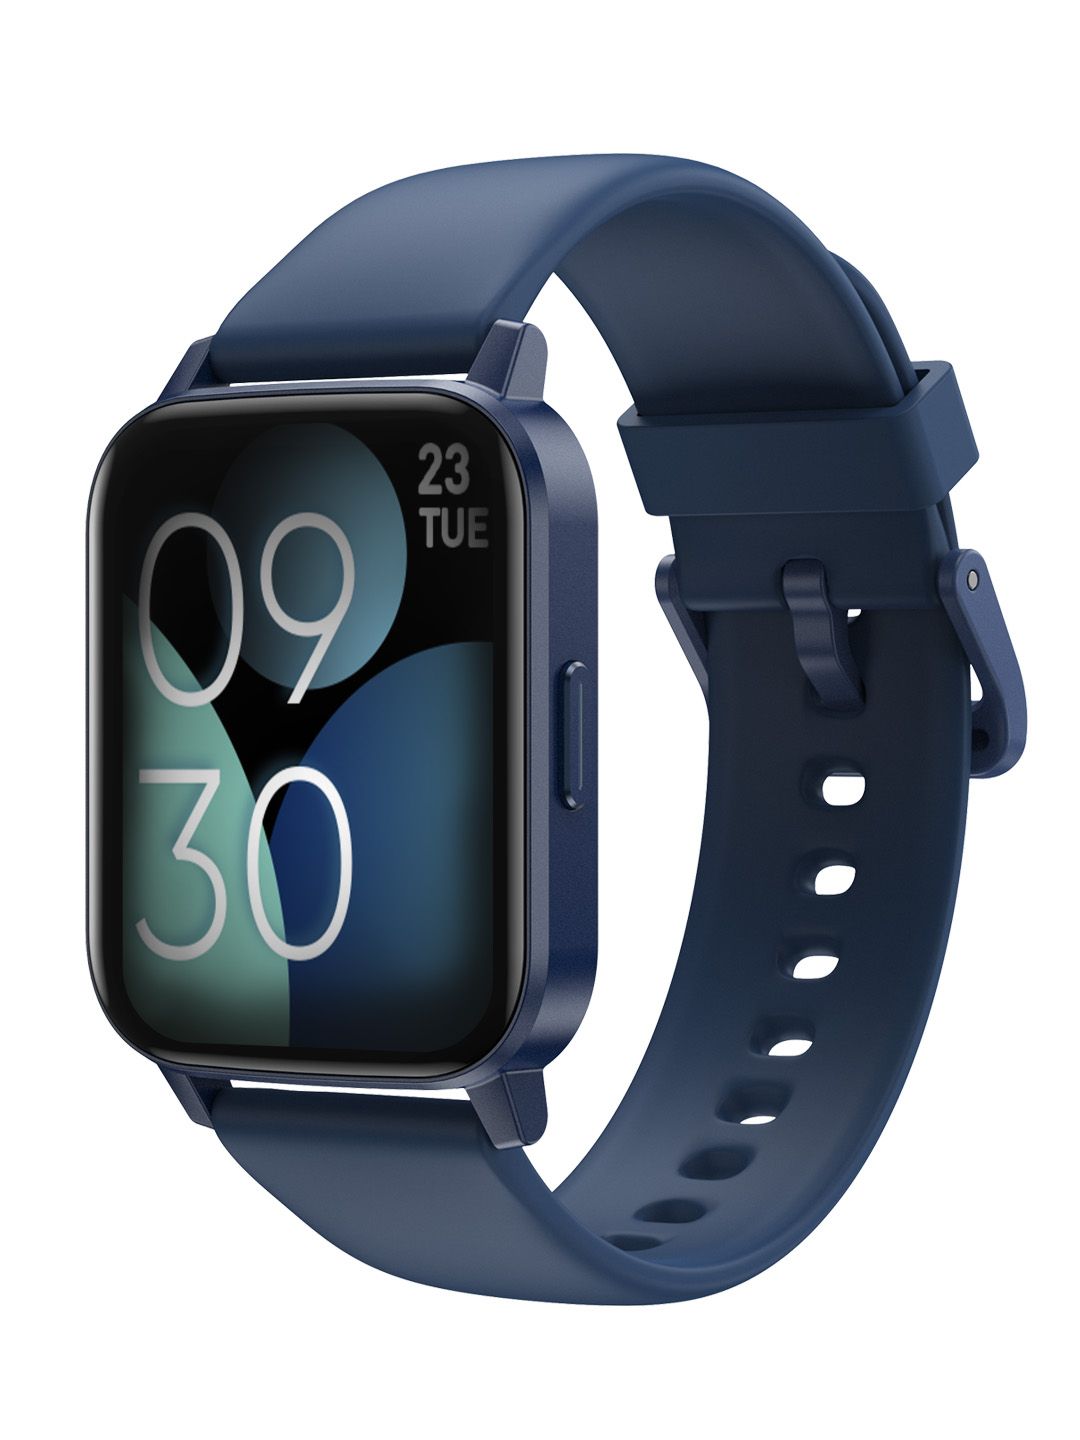 DIZO by realme TechLife Unisex Blue Watch 2 Sports Smartwatch Price in India